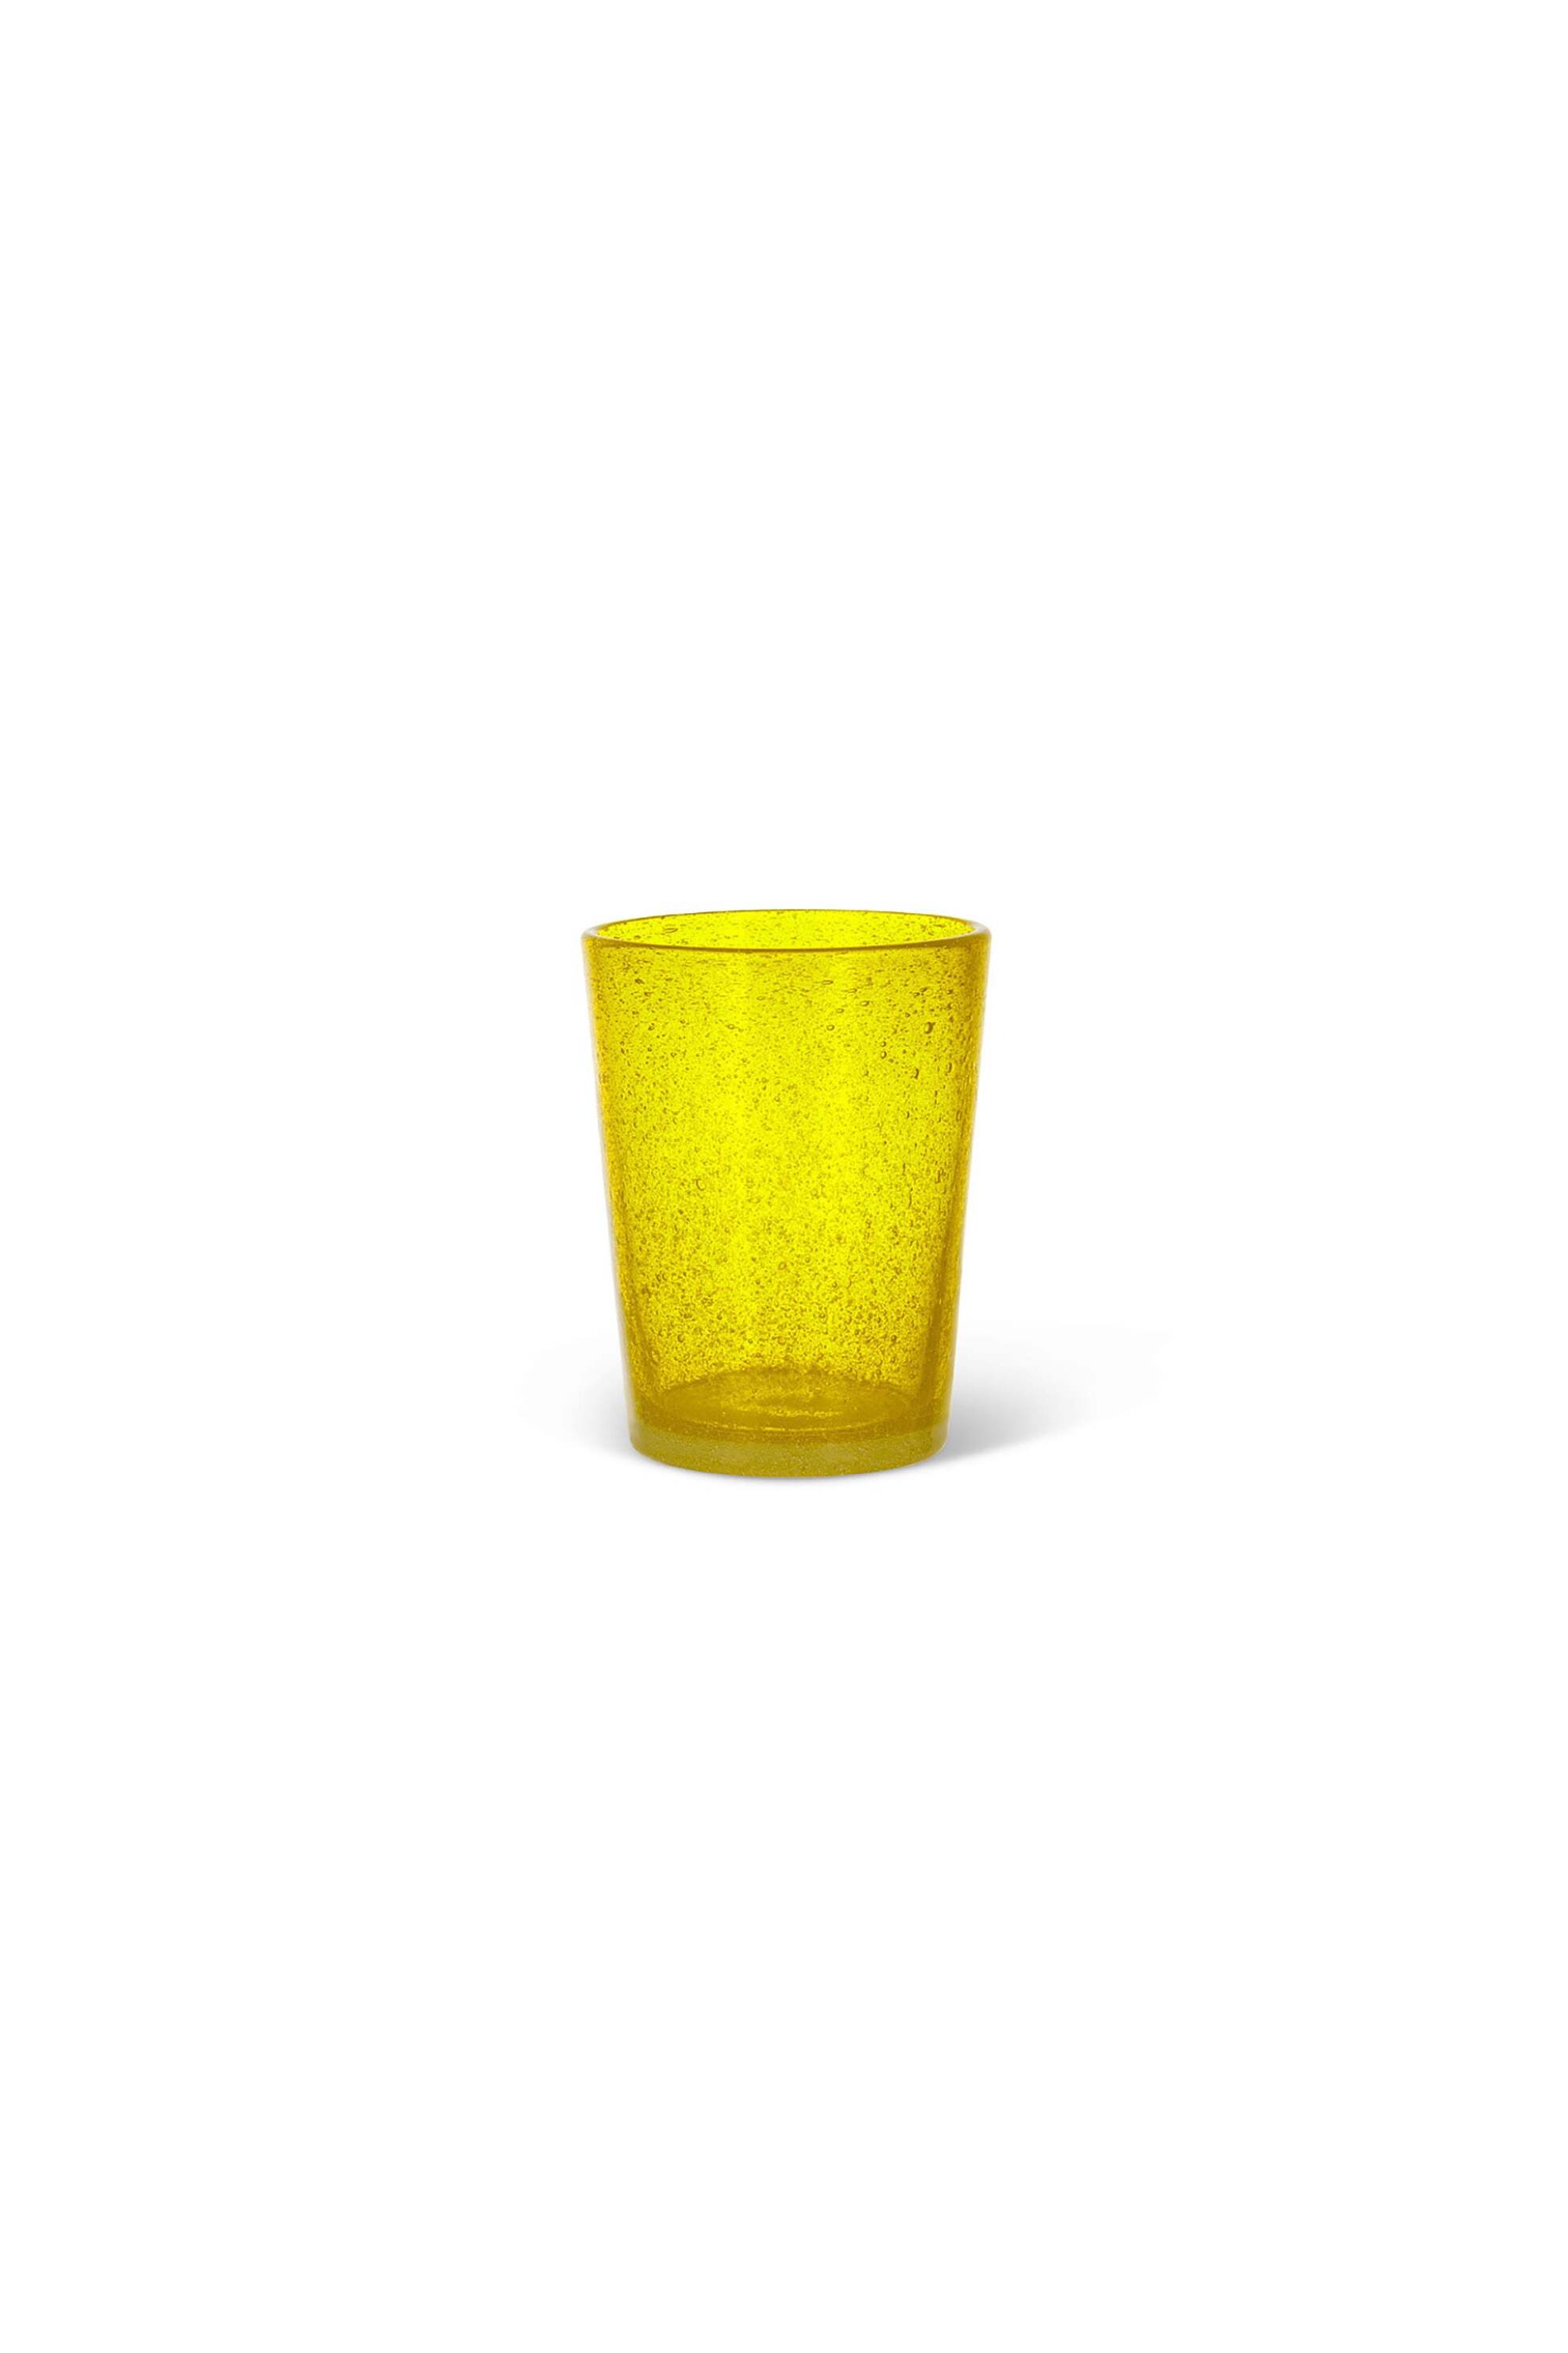 Home > ΚΟΥΖΙΝΑ > Υαλικά > Ποτήρια Coincasa ποτήρι γυάλινο με ανάγλυφο σχέδιο 10 x 8 cm - 007212457 Κίτρινο